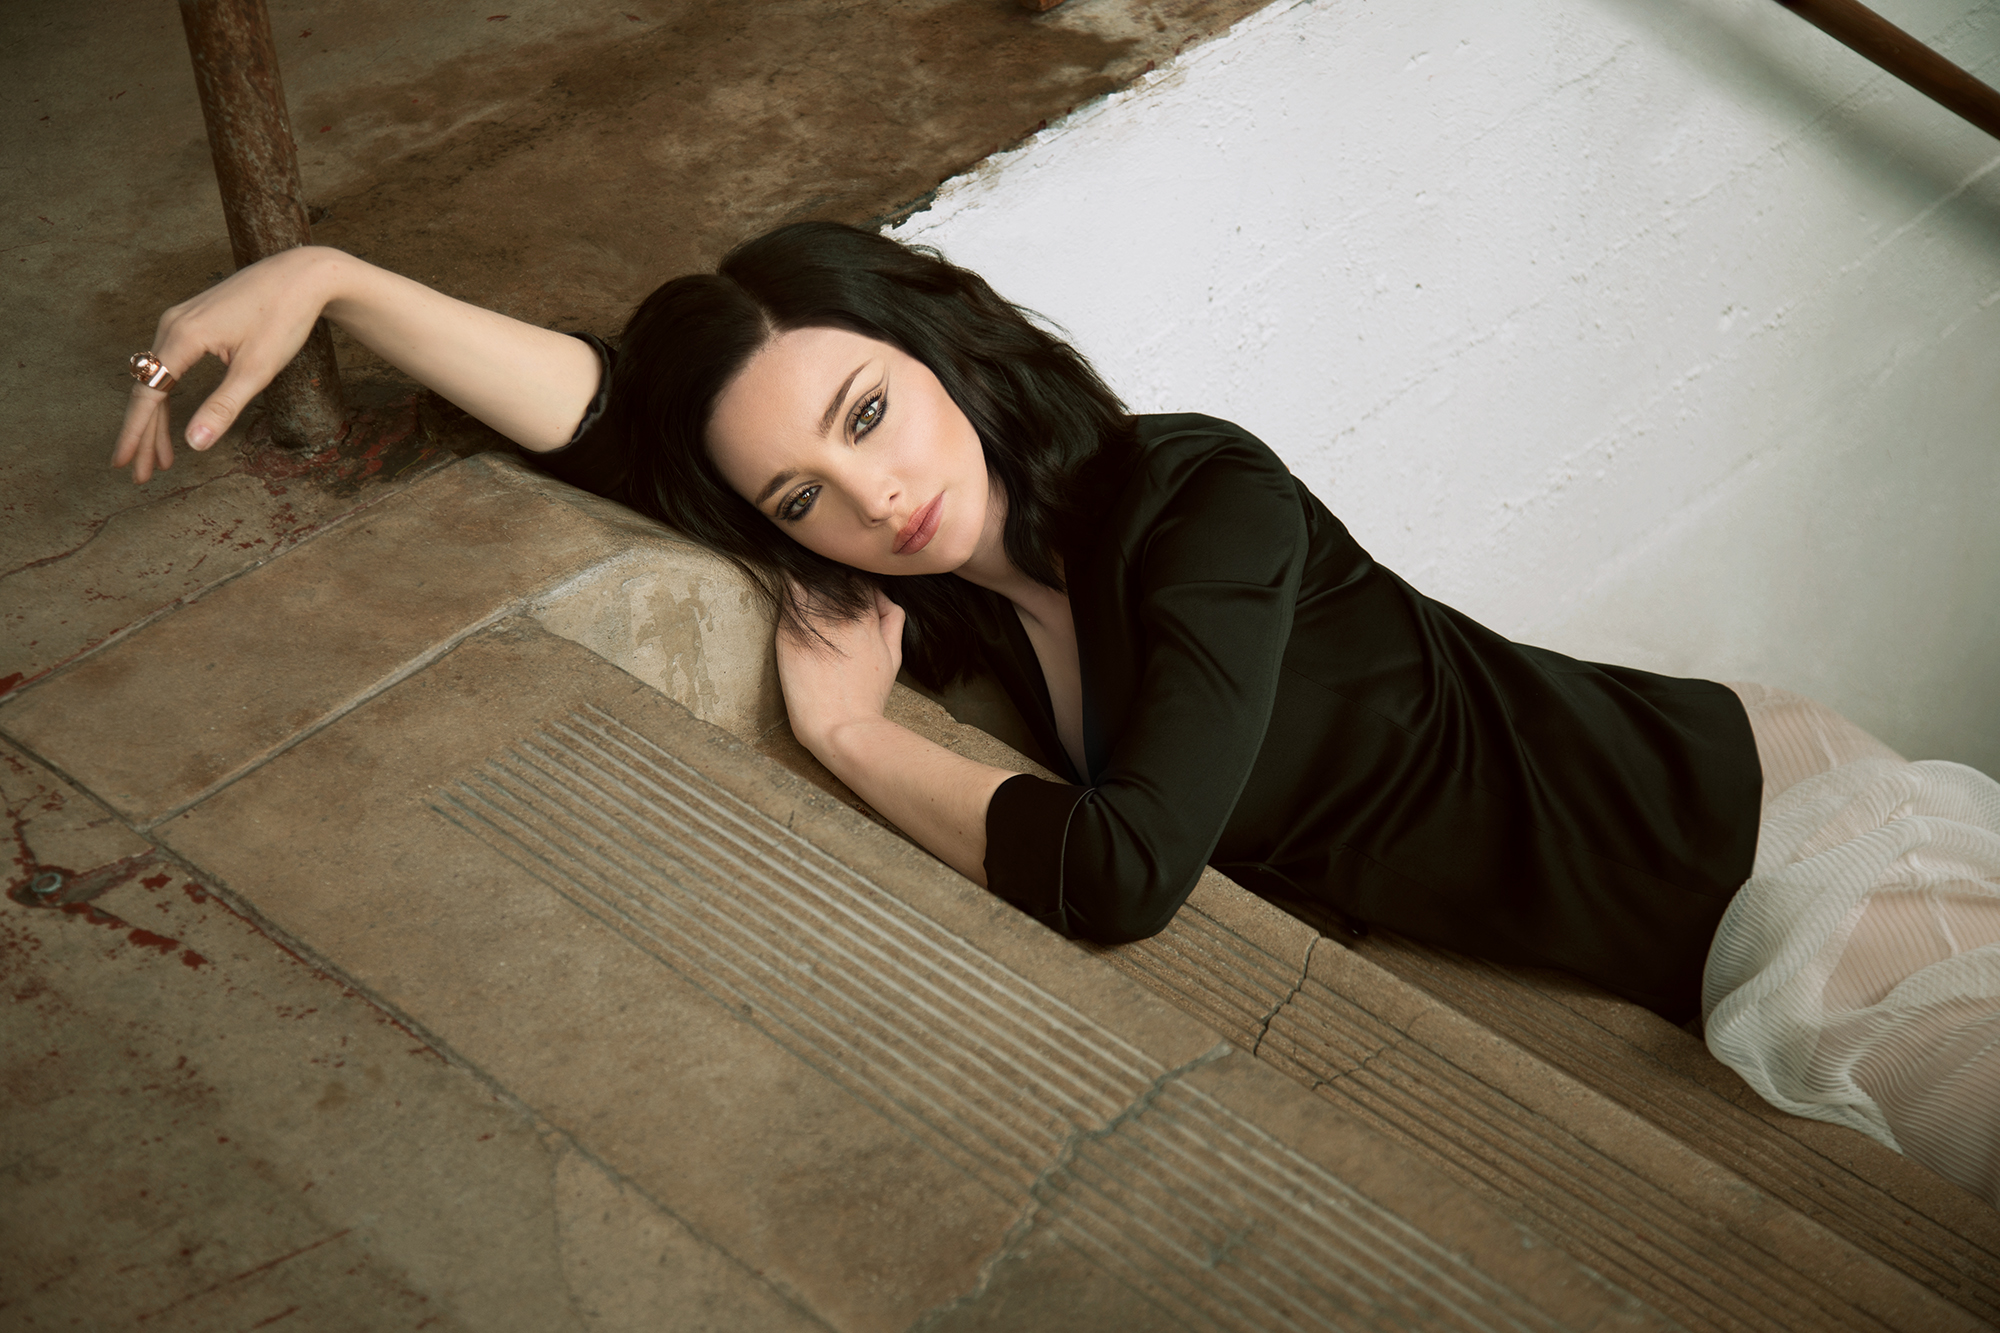 celebrity, emma dumont, actress, american, black hair, lying down